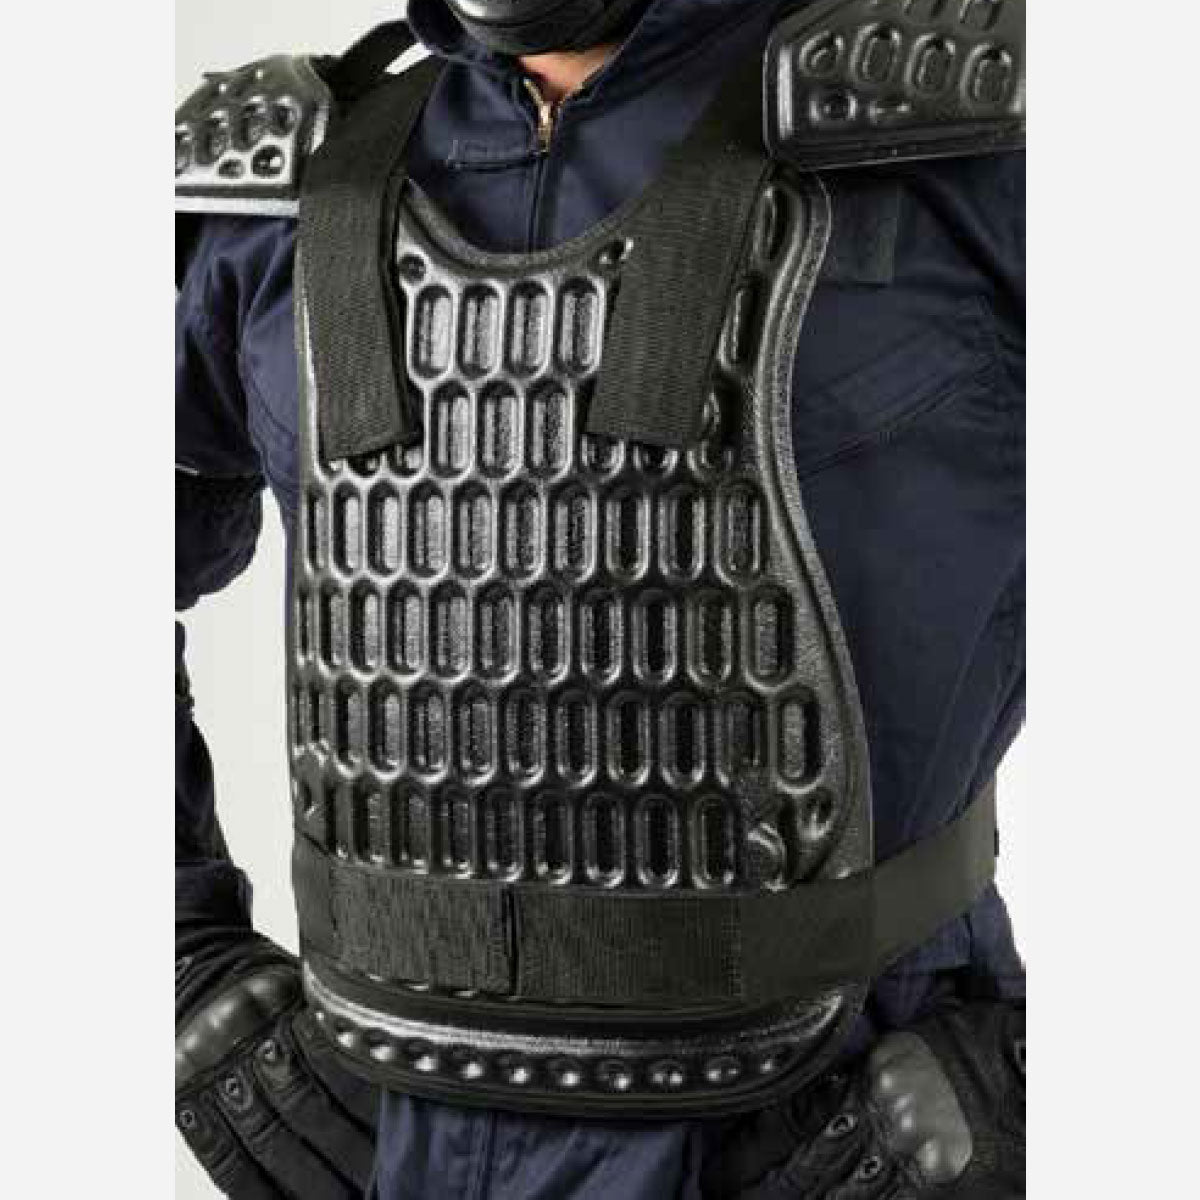 Scorpion PPE Chest Guards Protective Gear Scorpion Riot Equipment Tactical Gear Supplier Tactical Distributors Australia